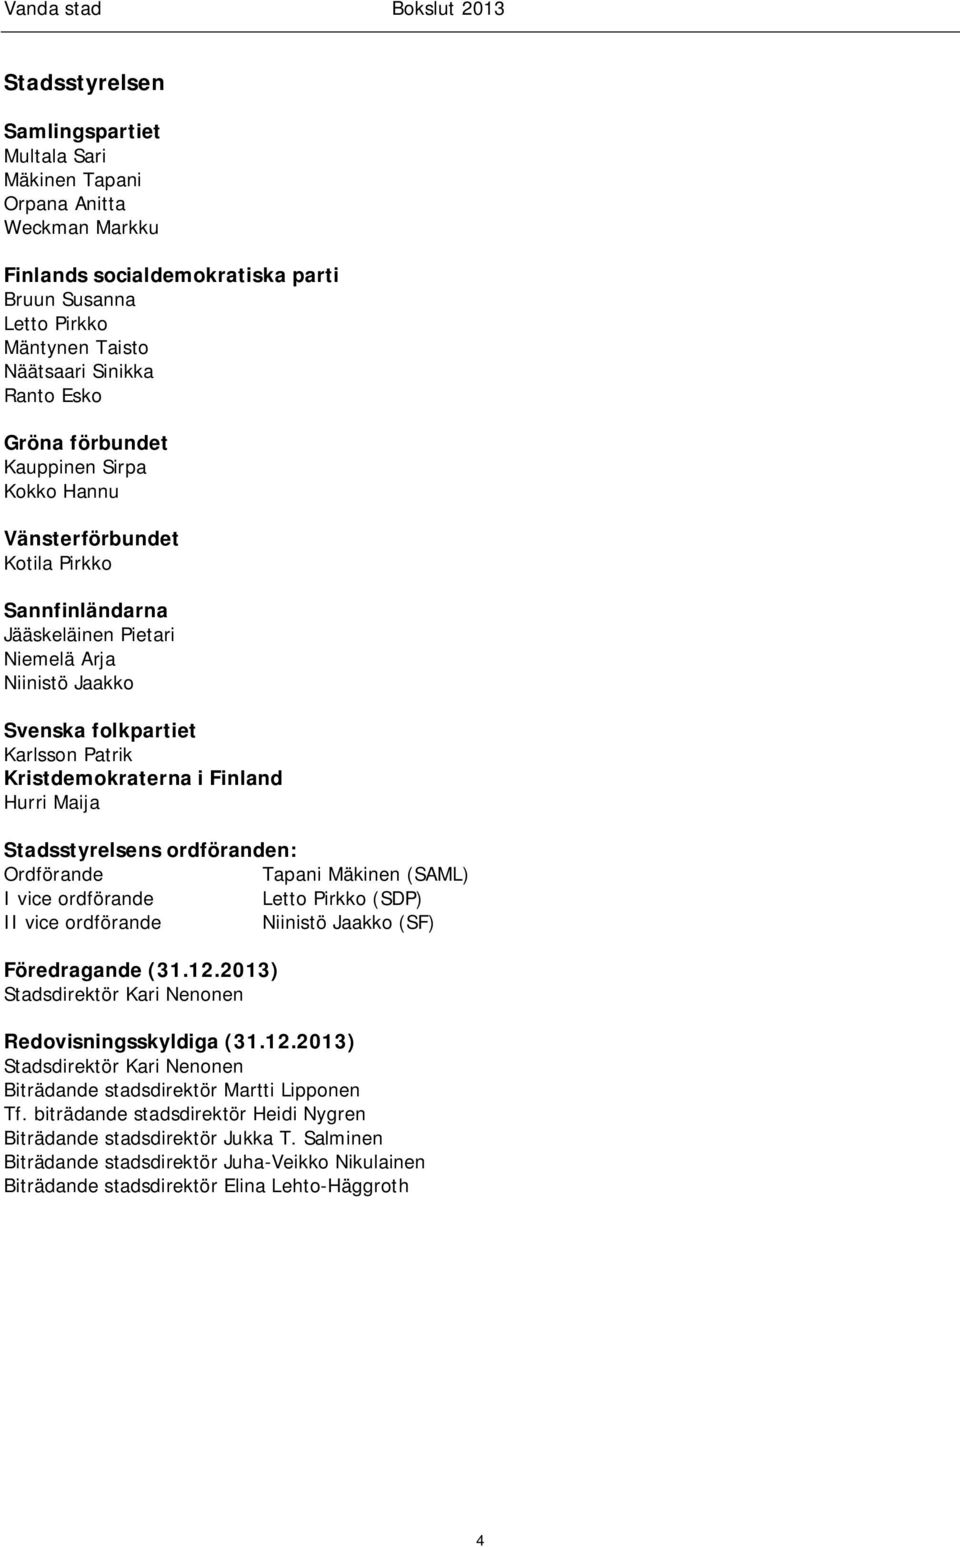 Hurri Maija Stadsstyrelsens ordföranden: Ordförande Tapani Mäkinen (SAML) I vice ordförande Letto Pirkko (SDP) II vice ordförande Niinistö Jaakko (SF) Föredragande (31.12.